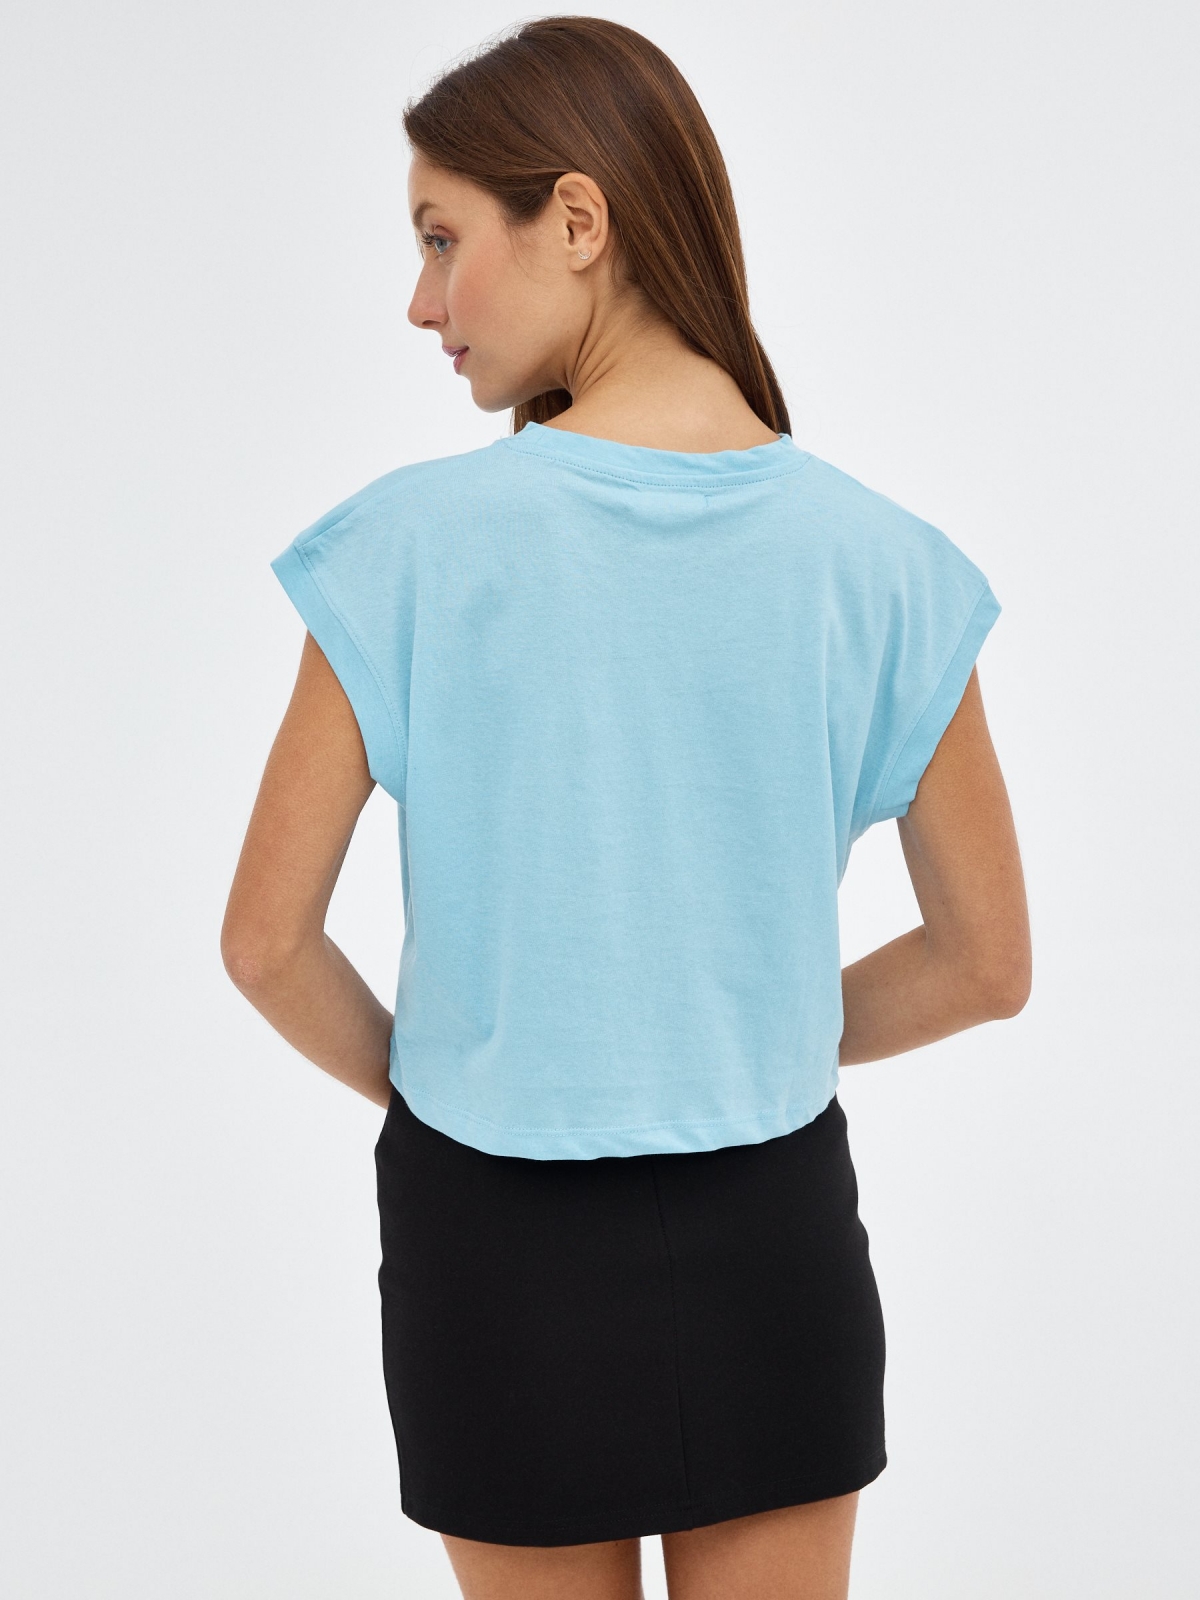 T-shirt gráfica laranja azul claro vista meia traseira